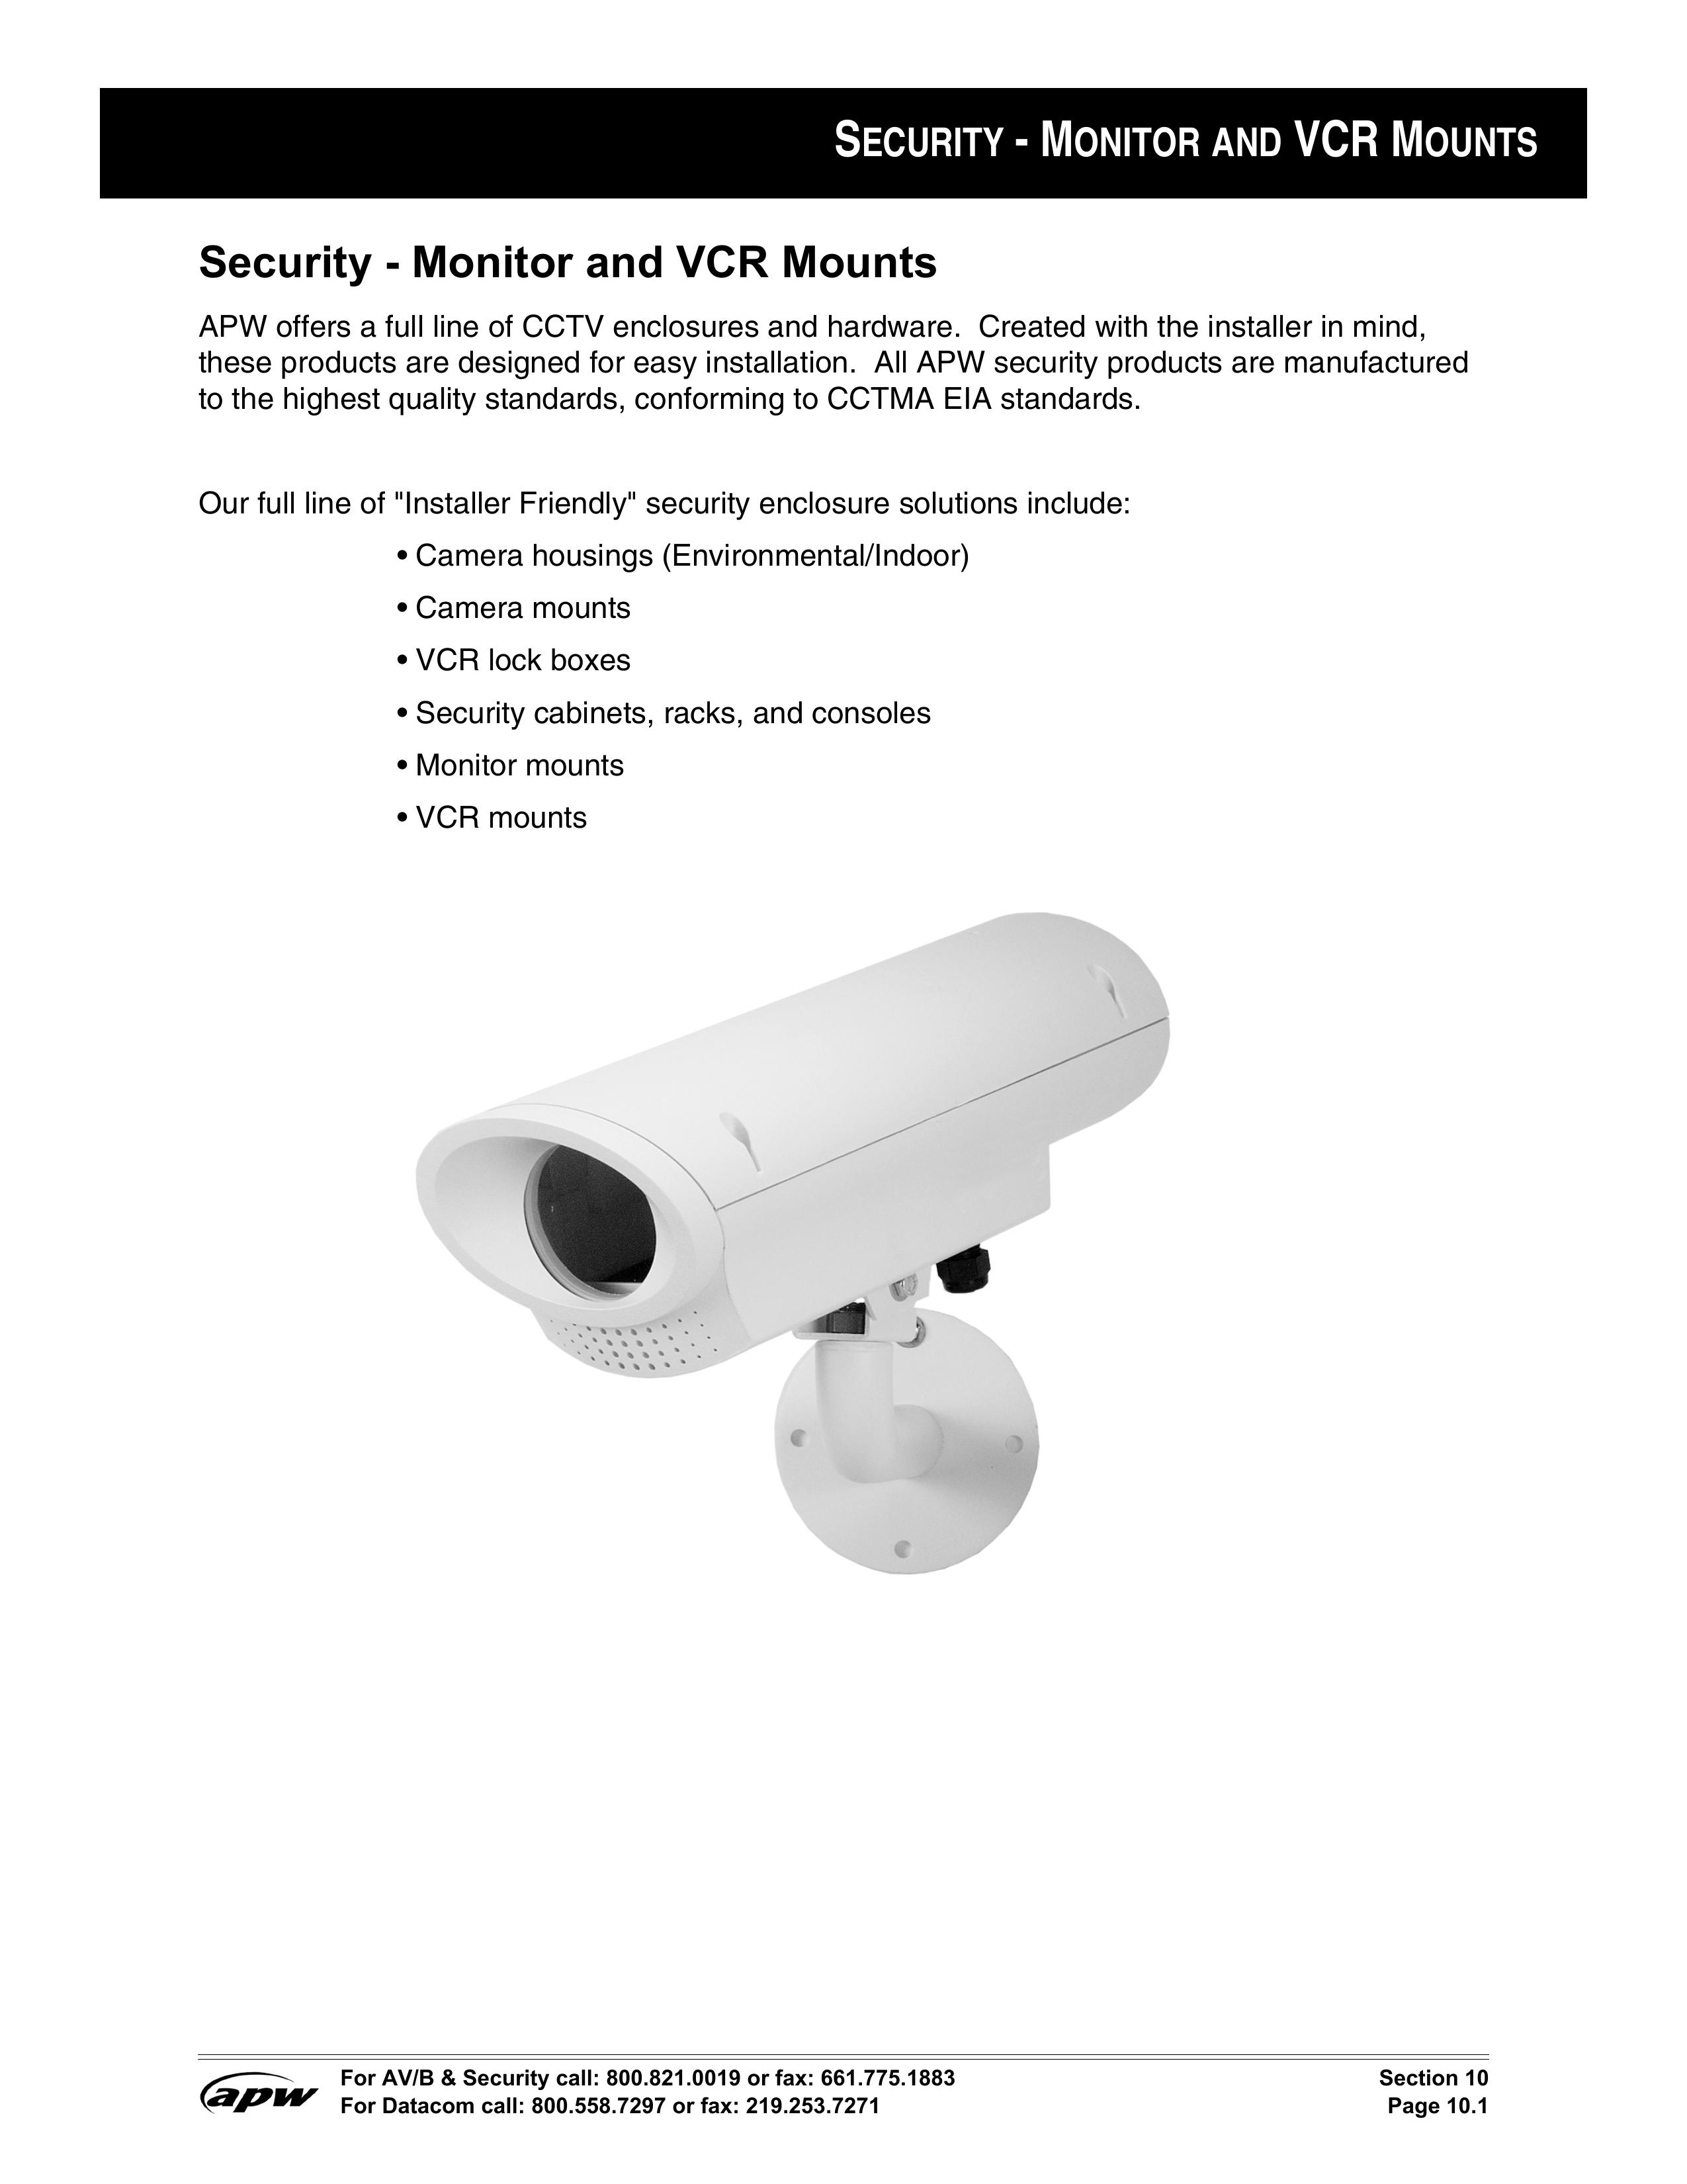 Pentax MCM-2 Security Camera User Manual